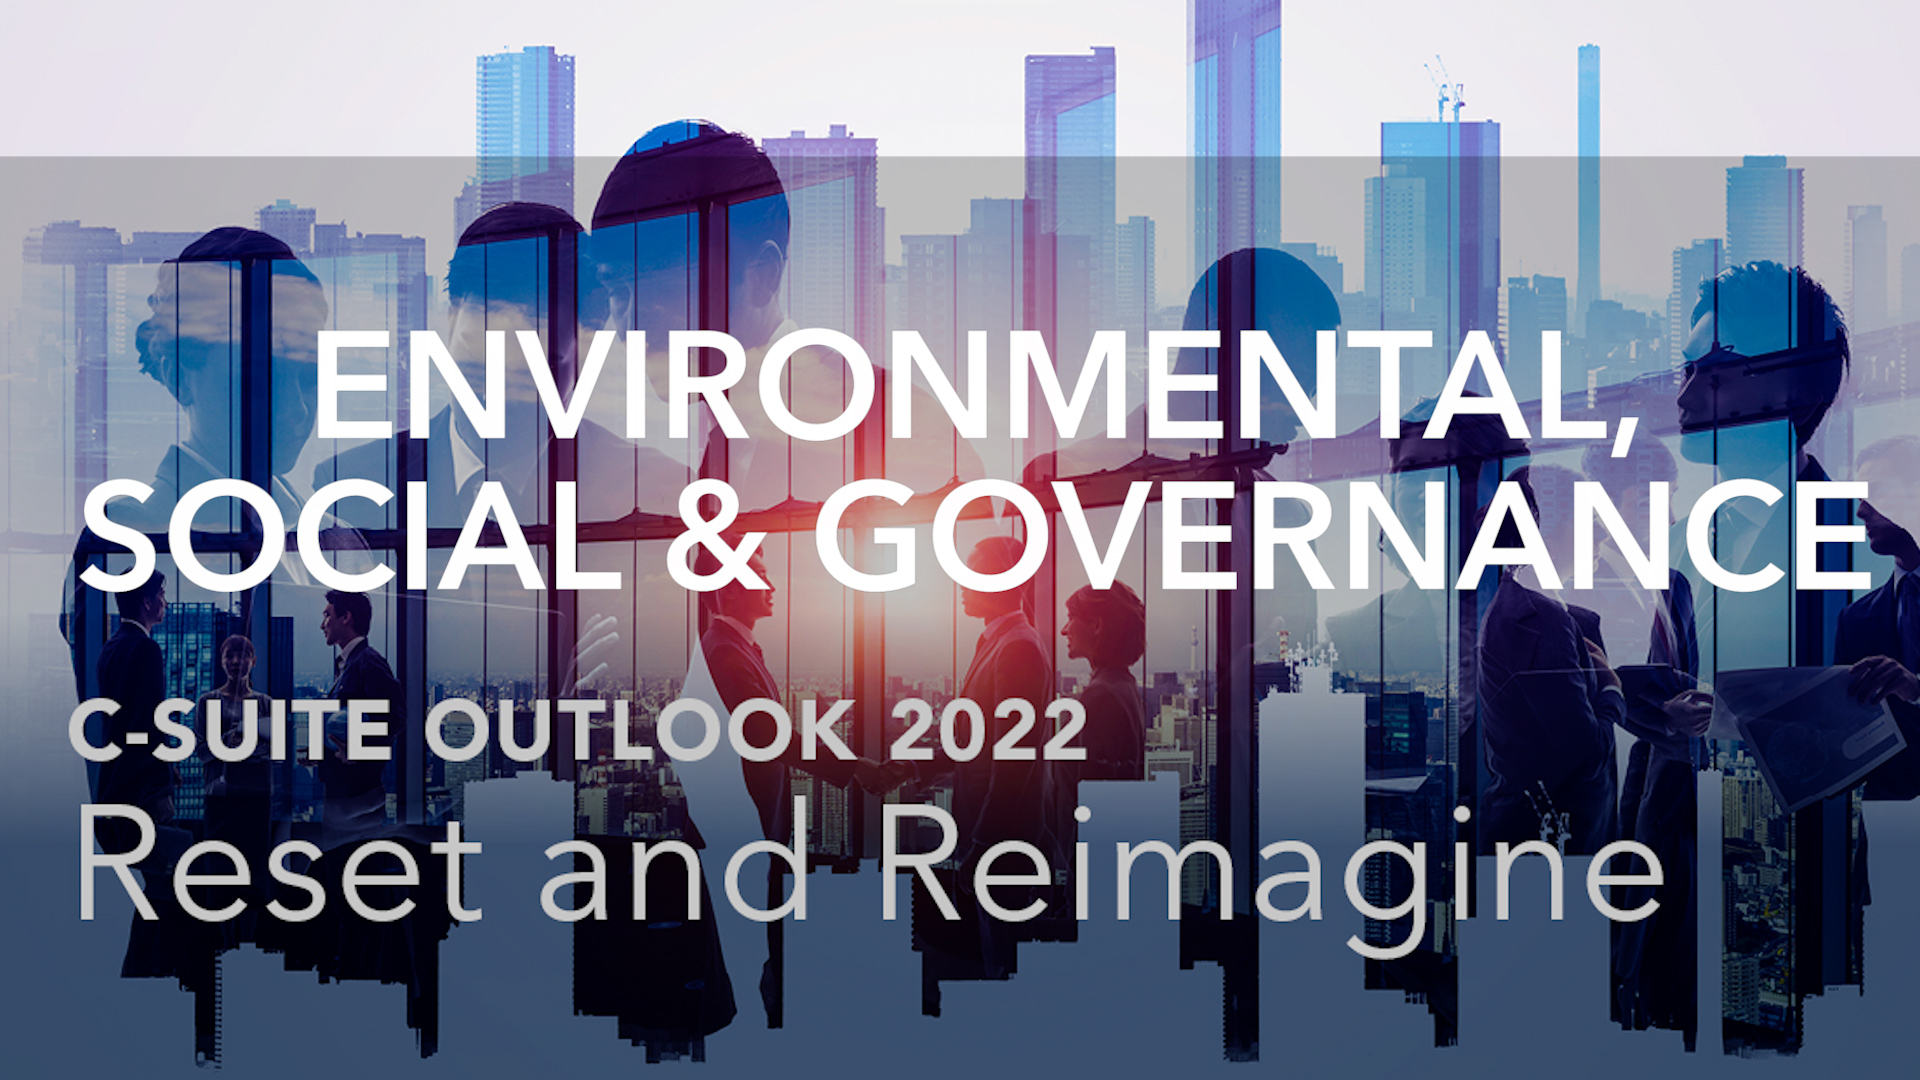 C-Suite Outlook 2022: Environmental, Social & Governance